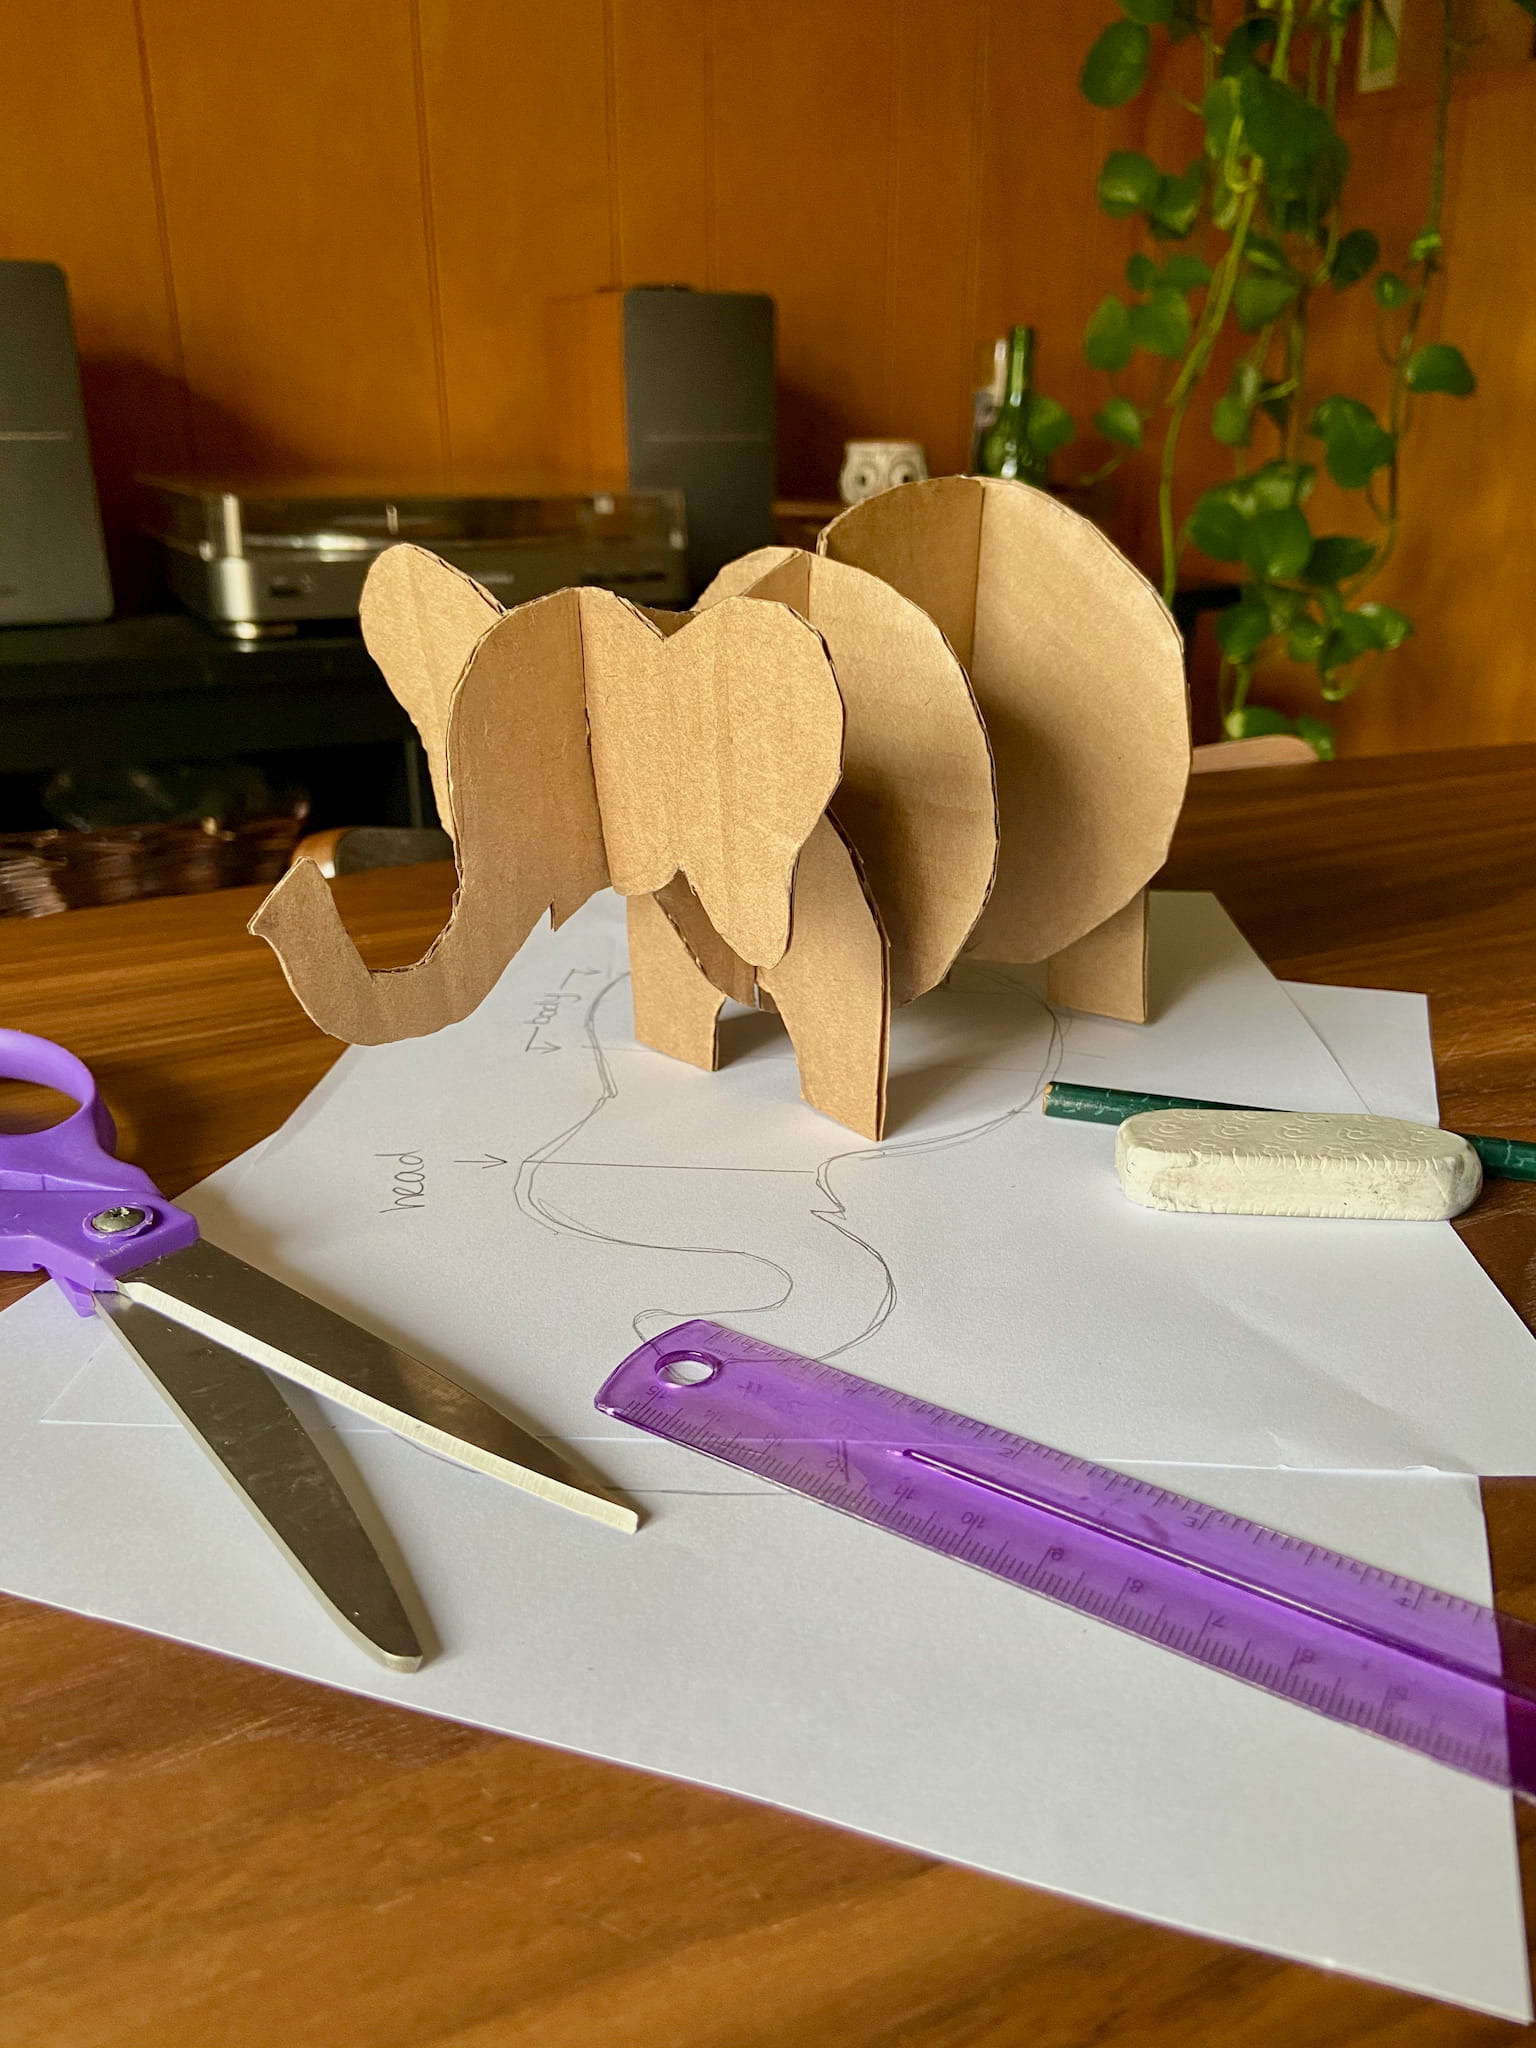 Craft at Home: Cardboard Elephant Sculpture